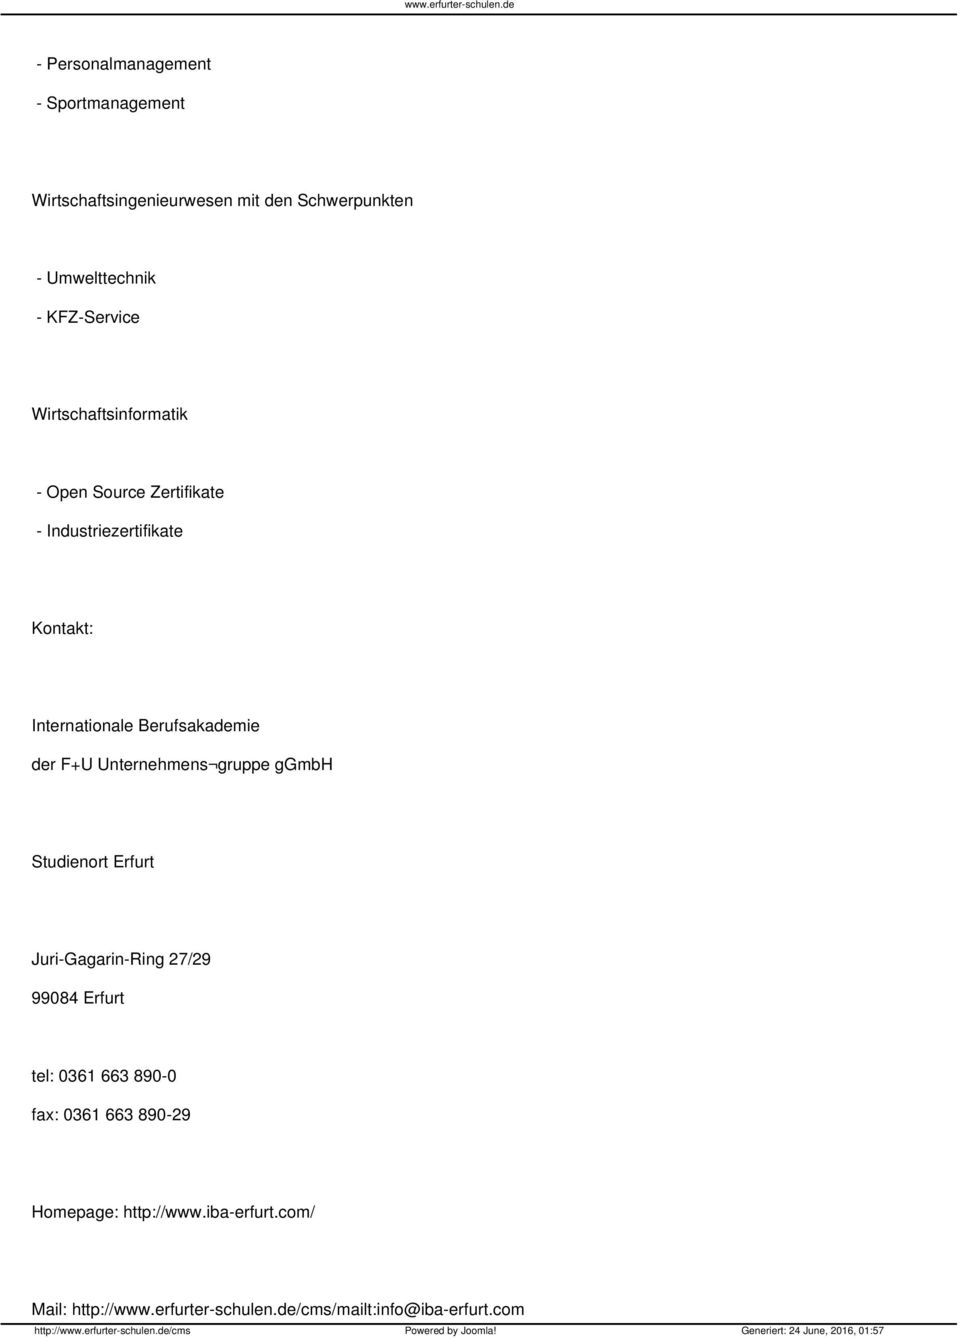 Open Source Zertifikate Industriezertifikate Kontakt: Internationale Berufsakademie der F+U Unternehmens gruppe ggmbh Studienort Erfurt